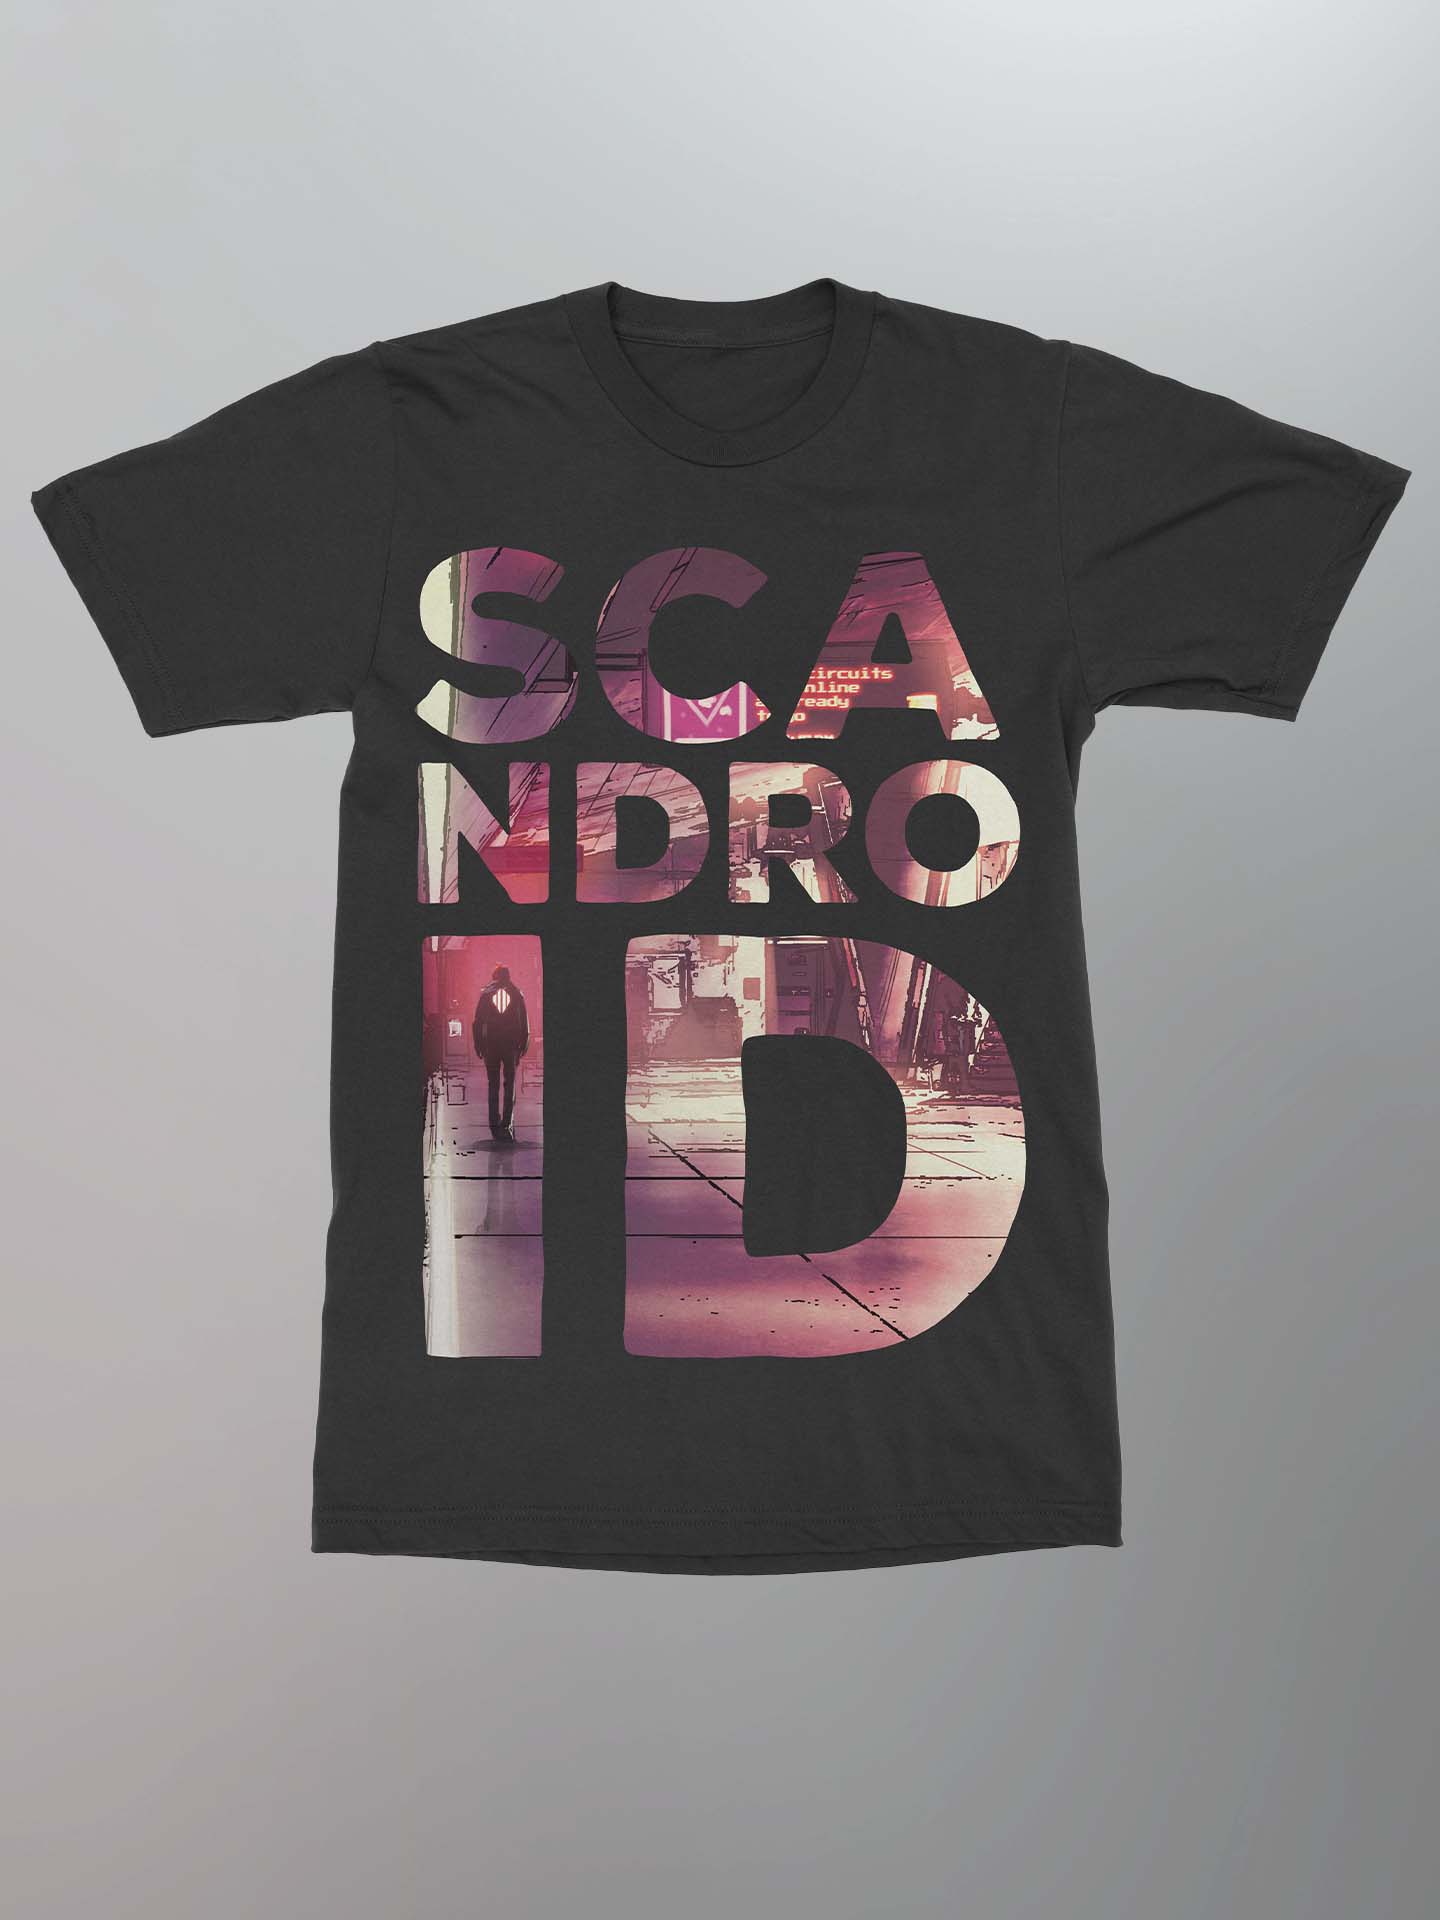 Scandroid - New York City Night Shirt